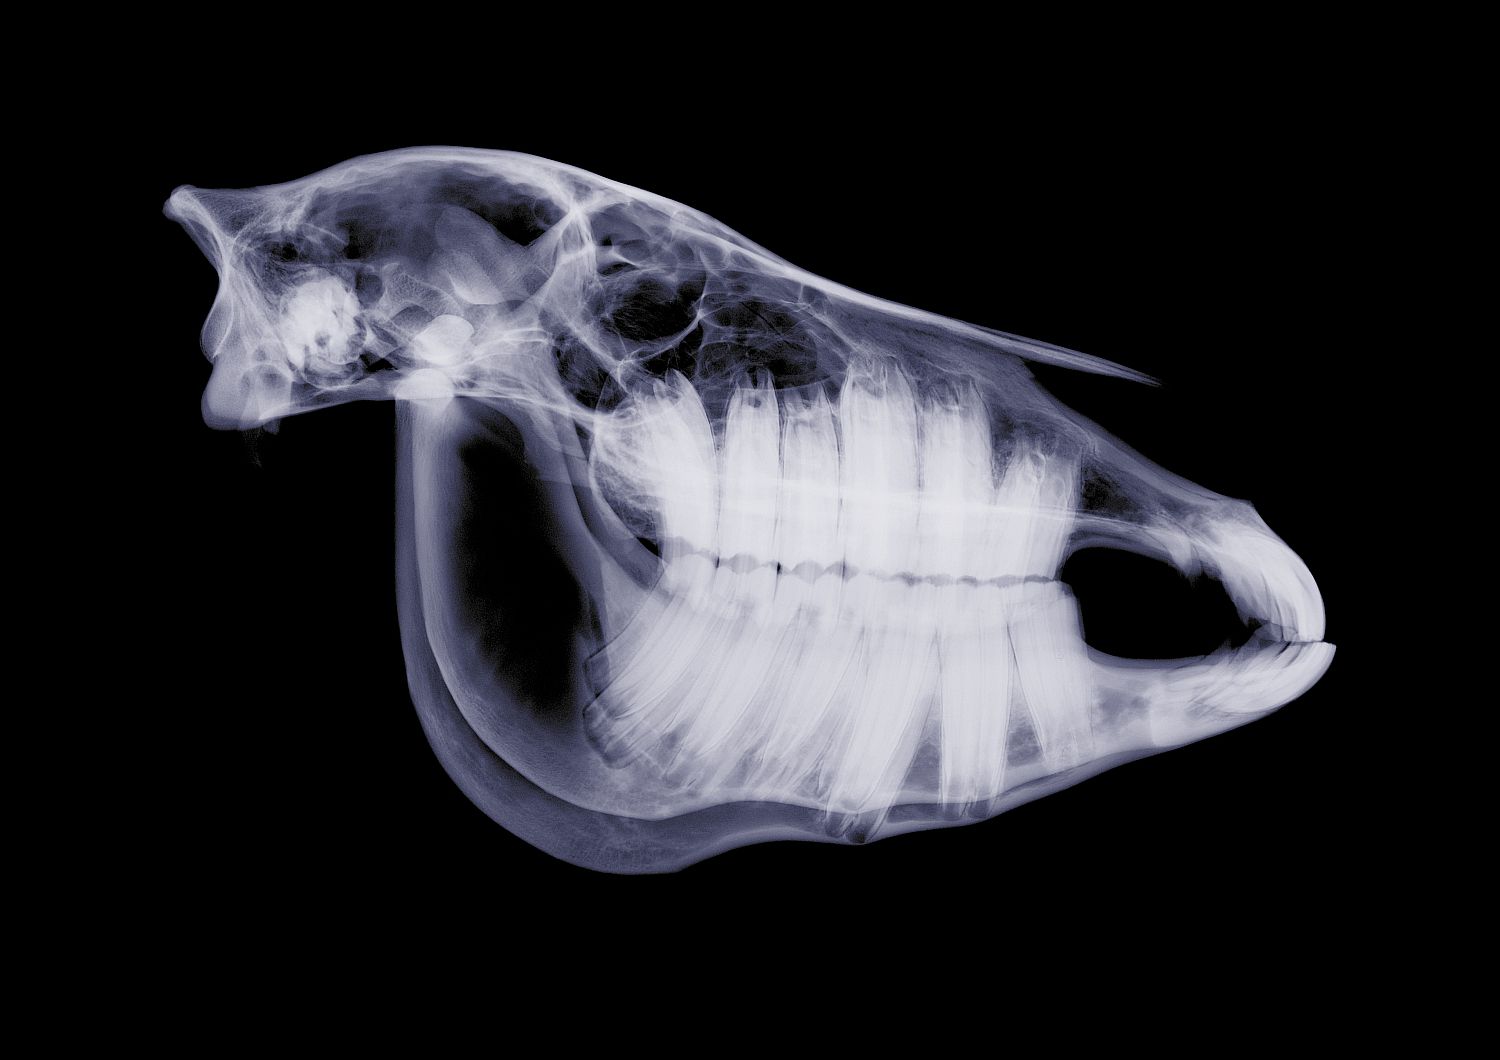 X-ray of horse skull, showing teeth